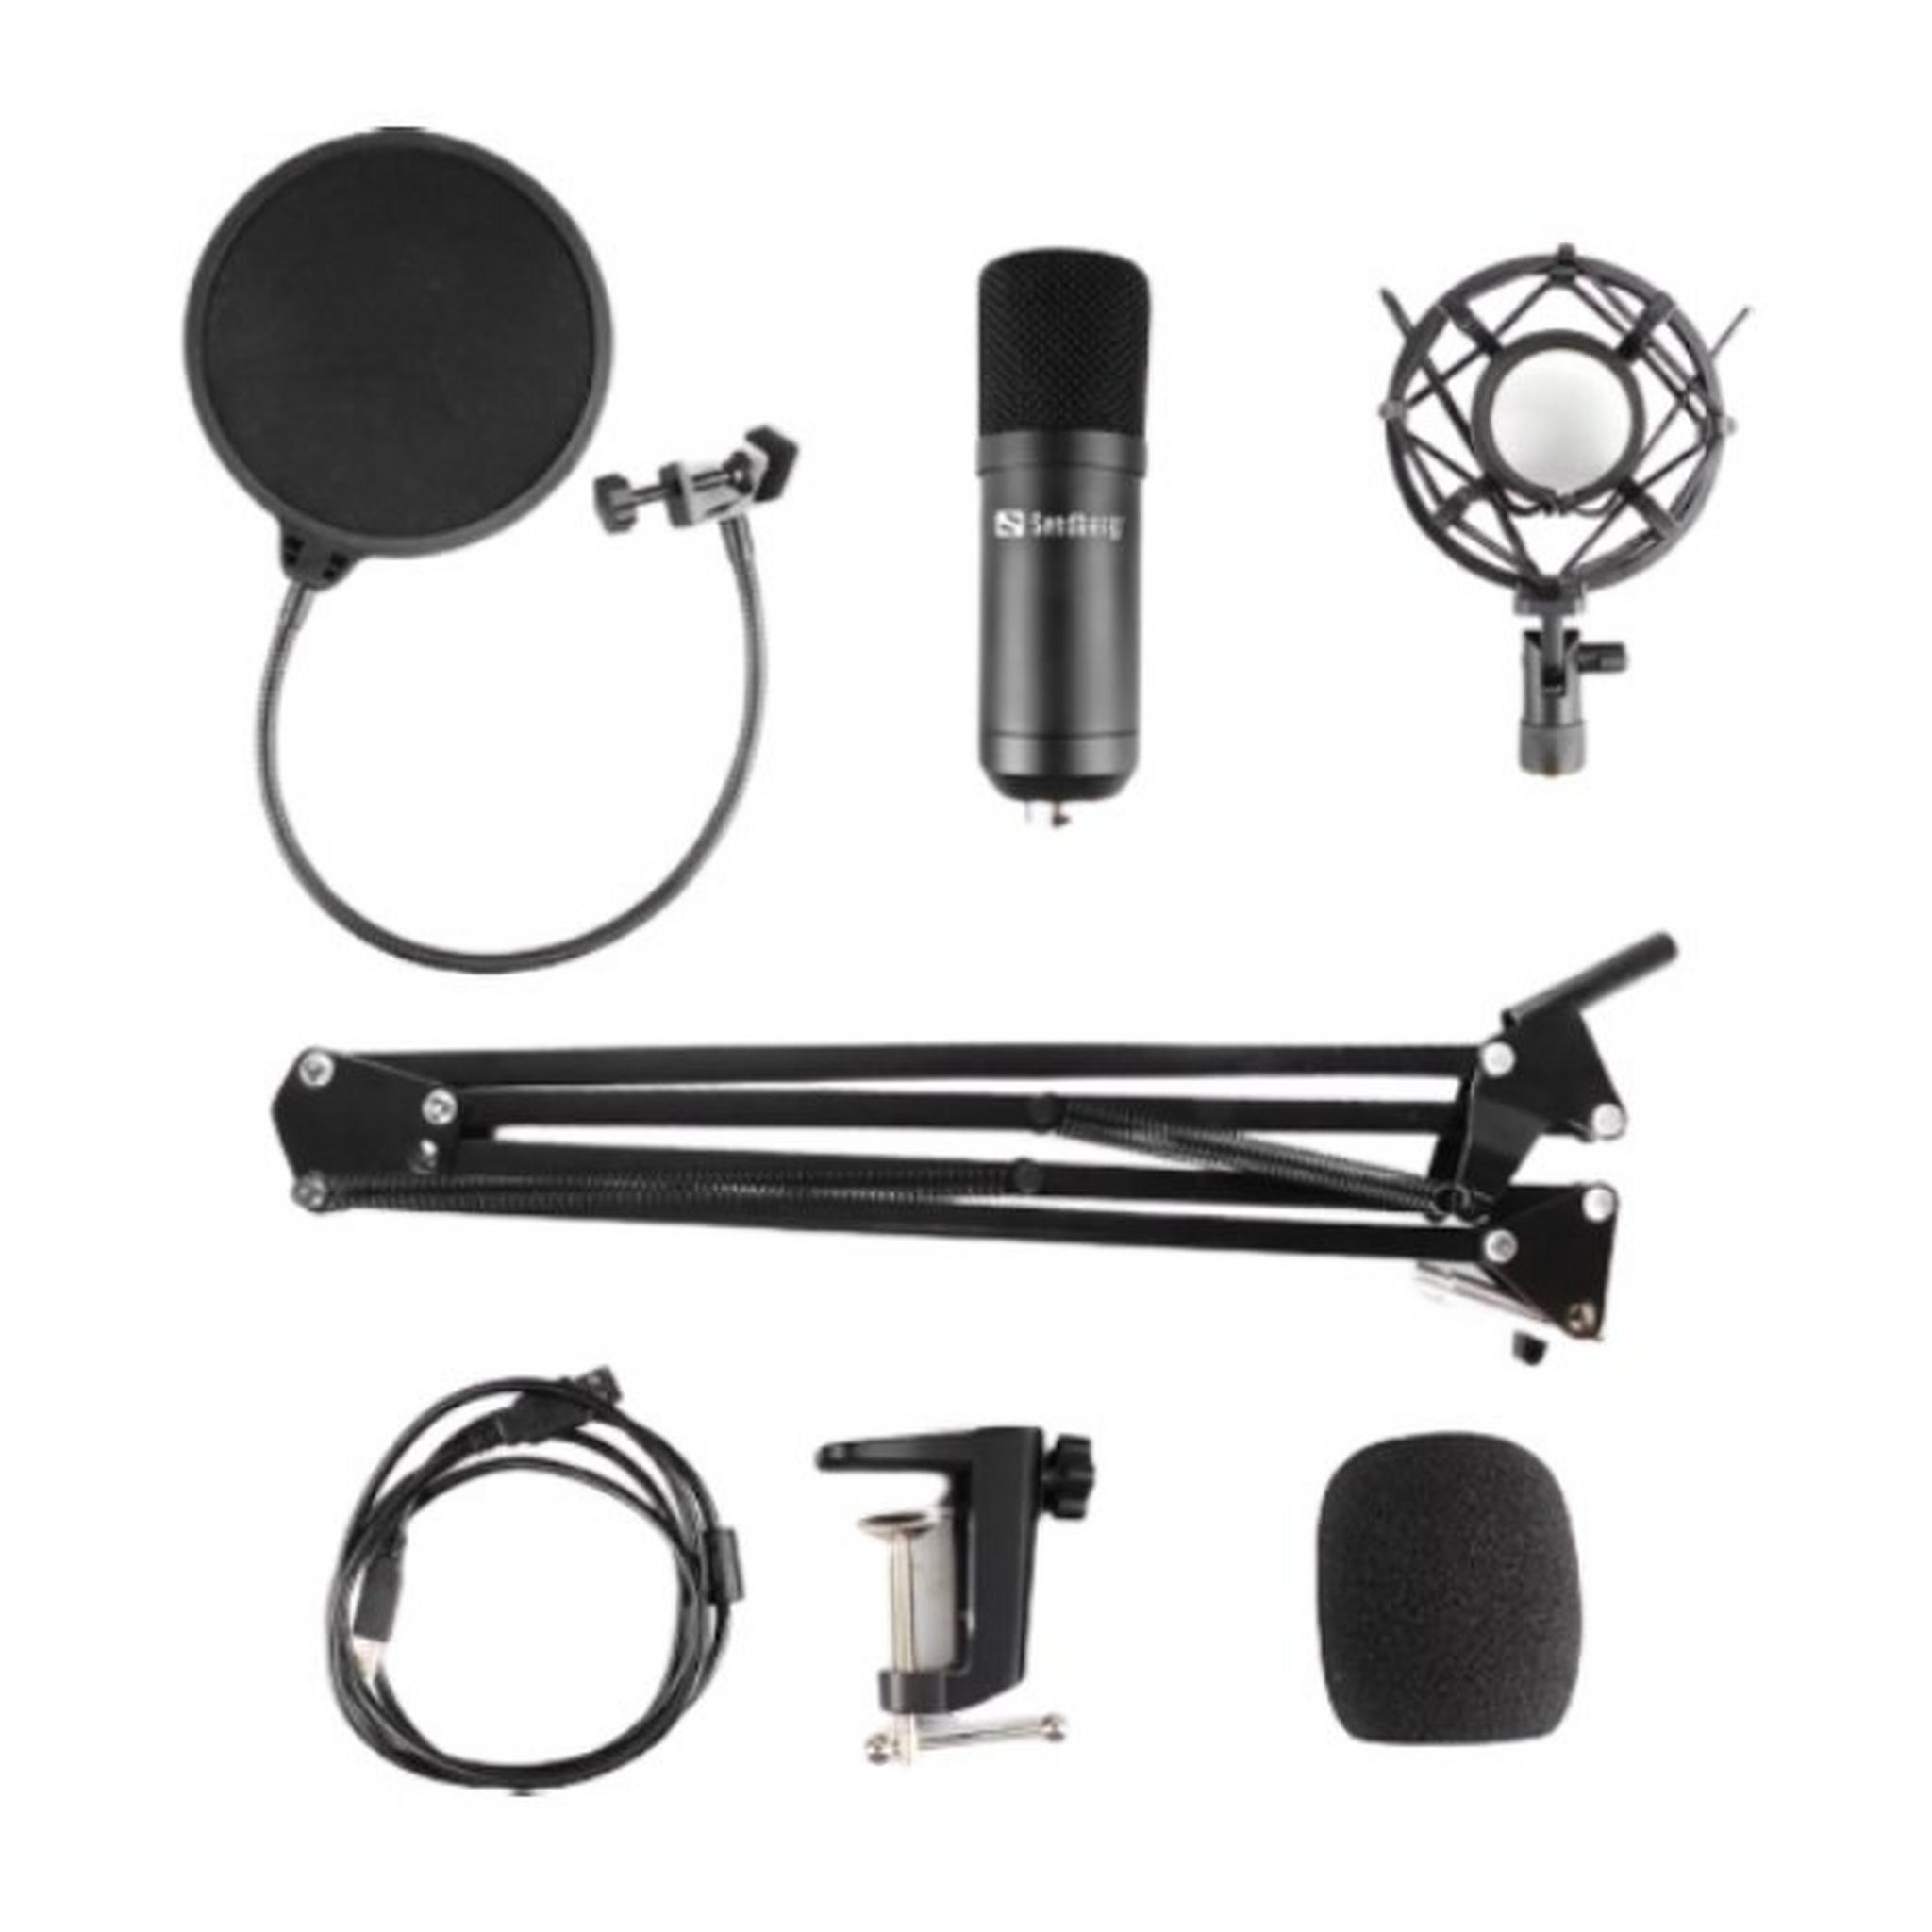 Sandberg Streamer USB Microphone Kit - Black